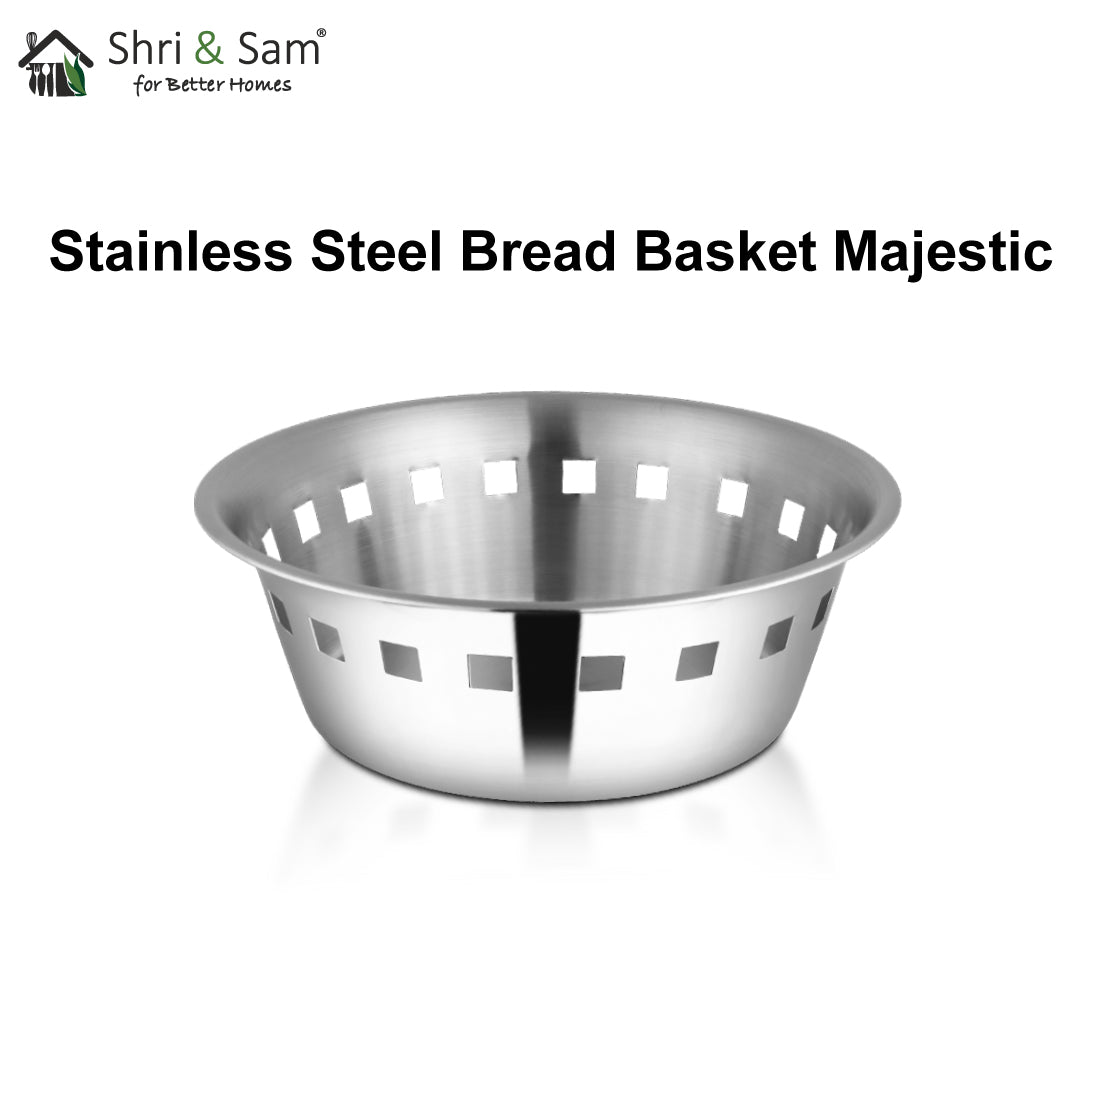 Stainless Steel Bread Basket Majestic